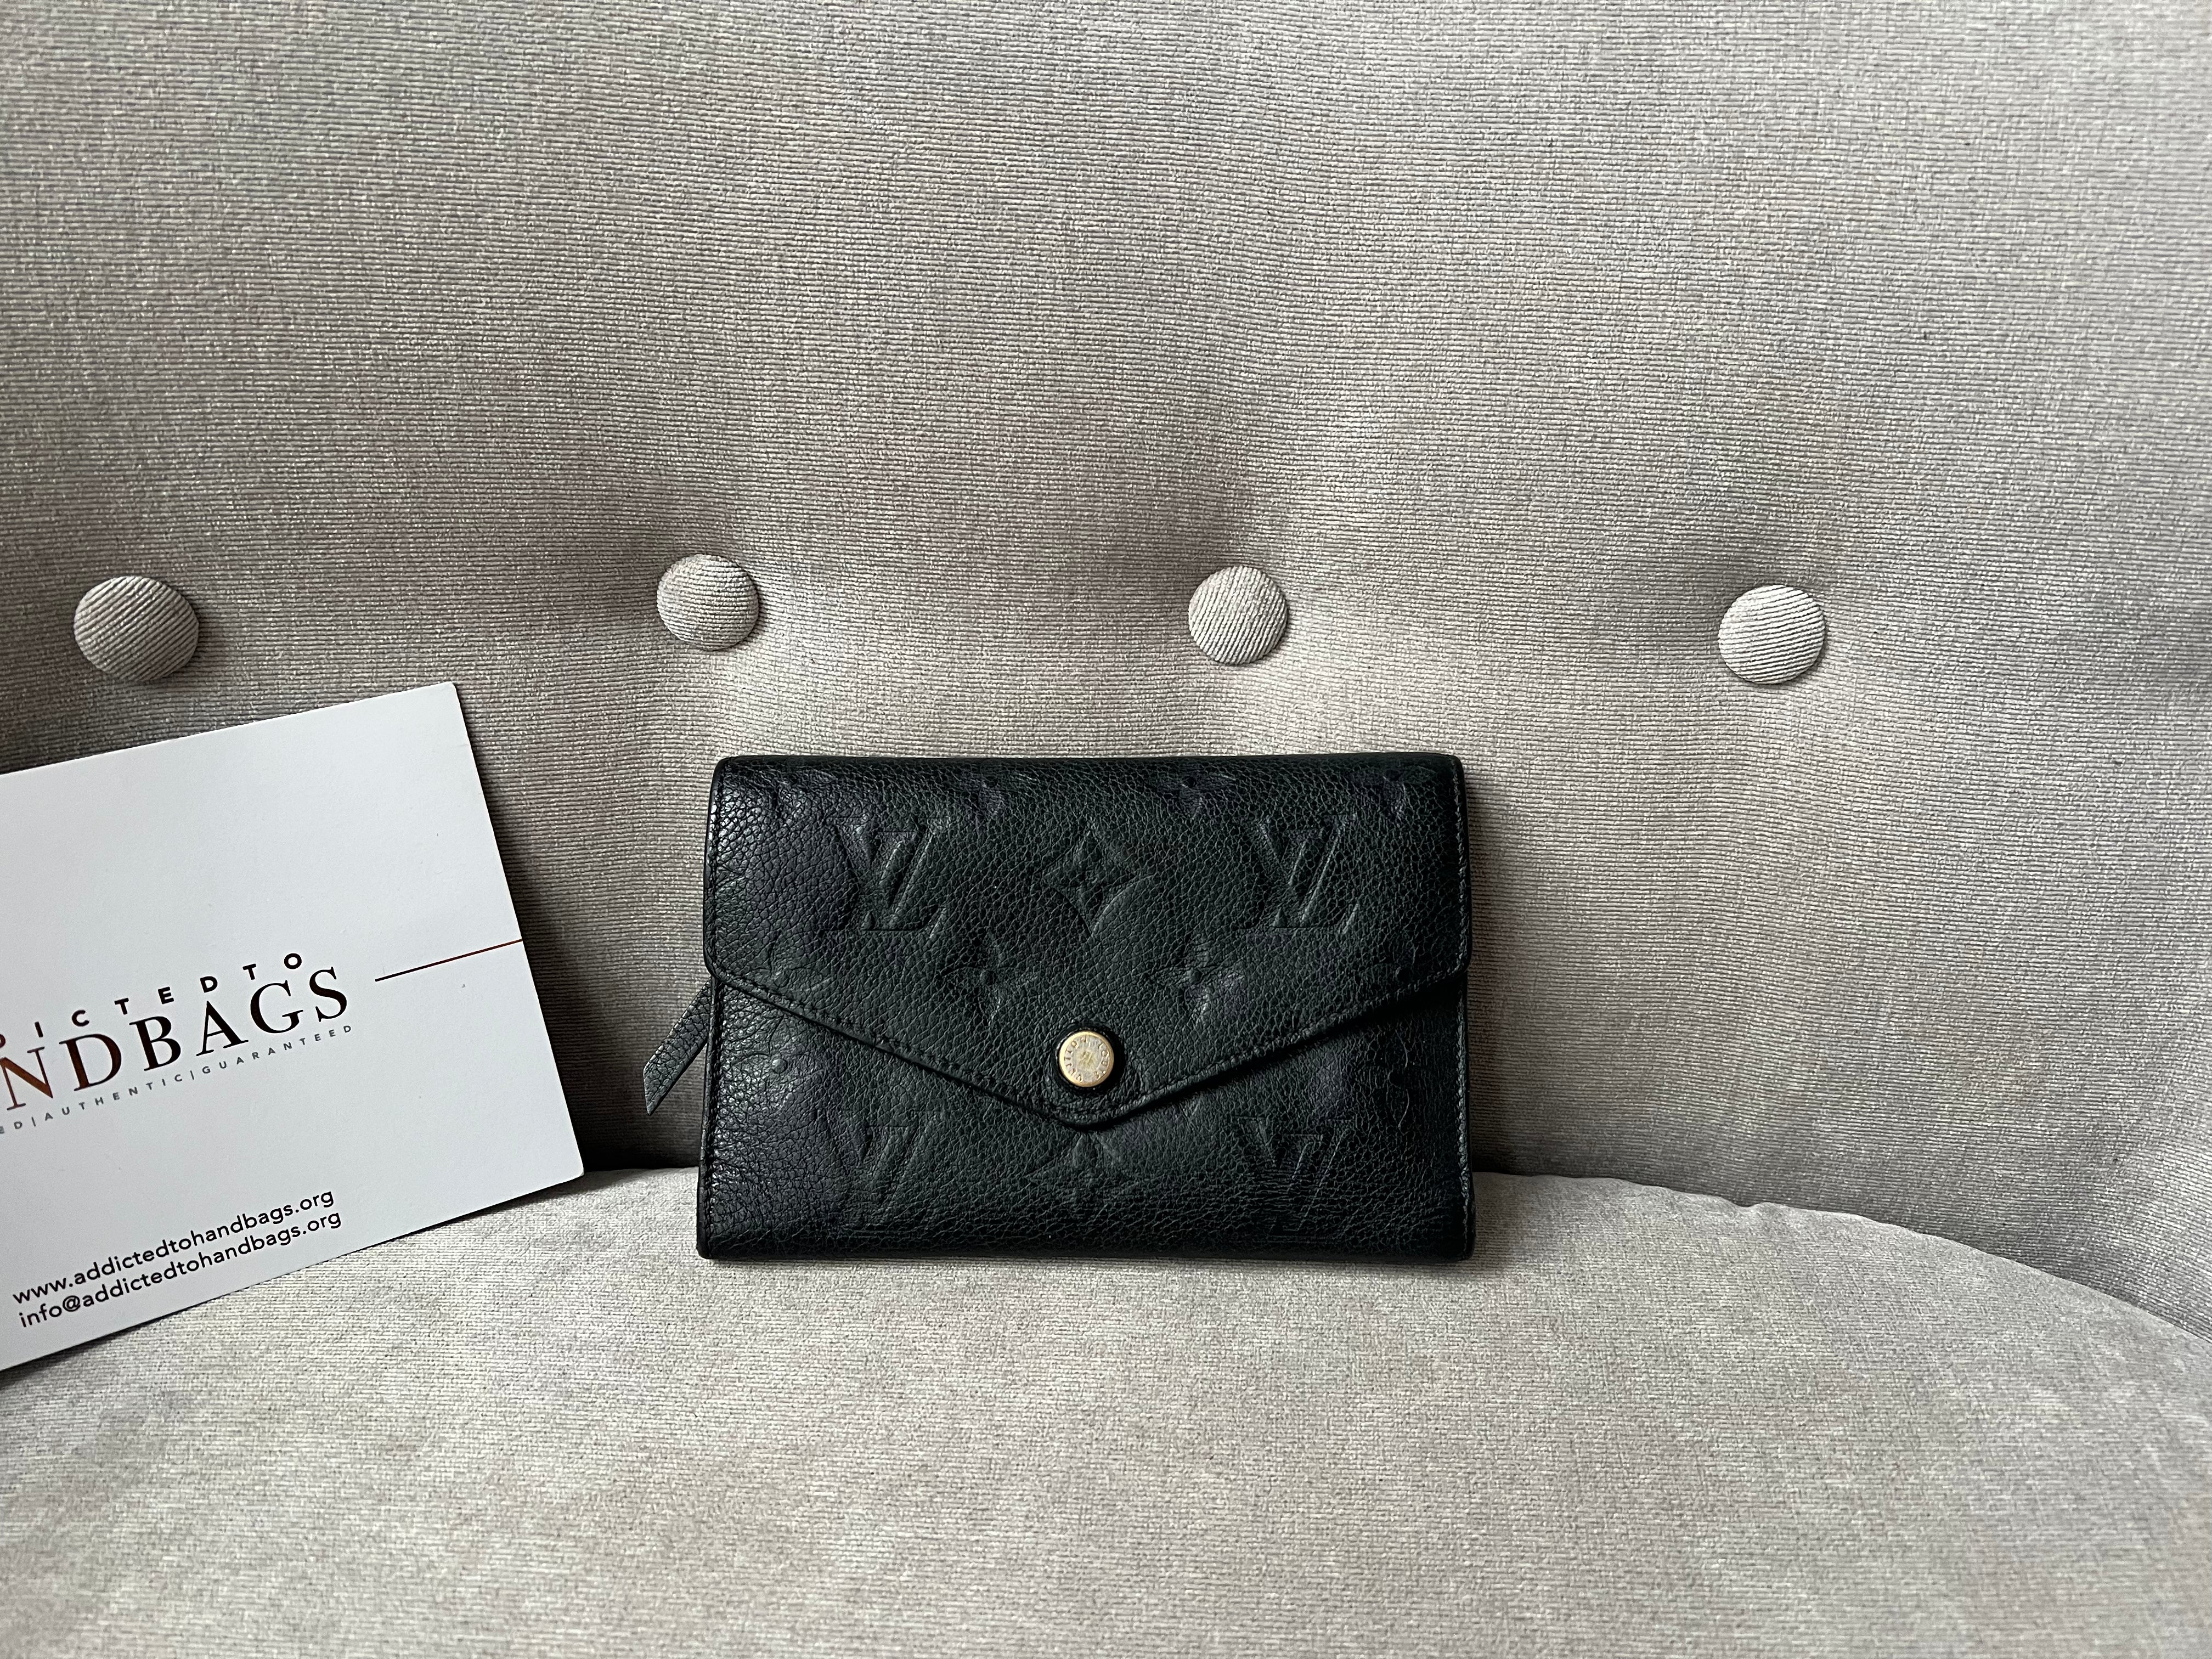 Louis Vuitton Compact Victorine Wallet Monogram Empreinte Leather